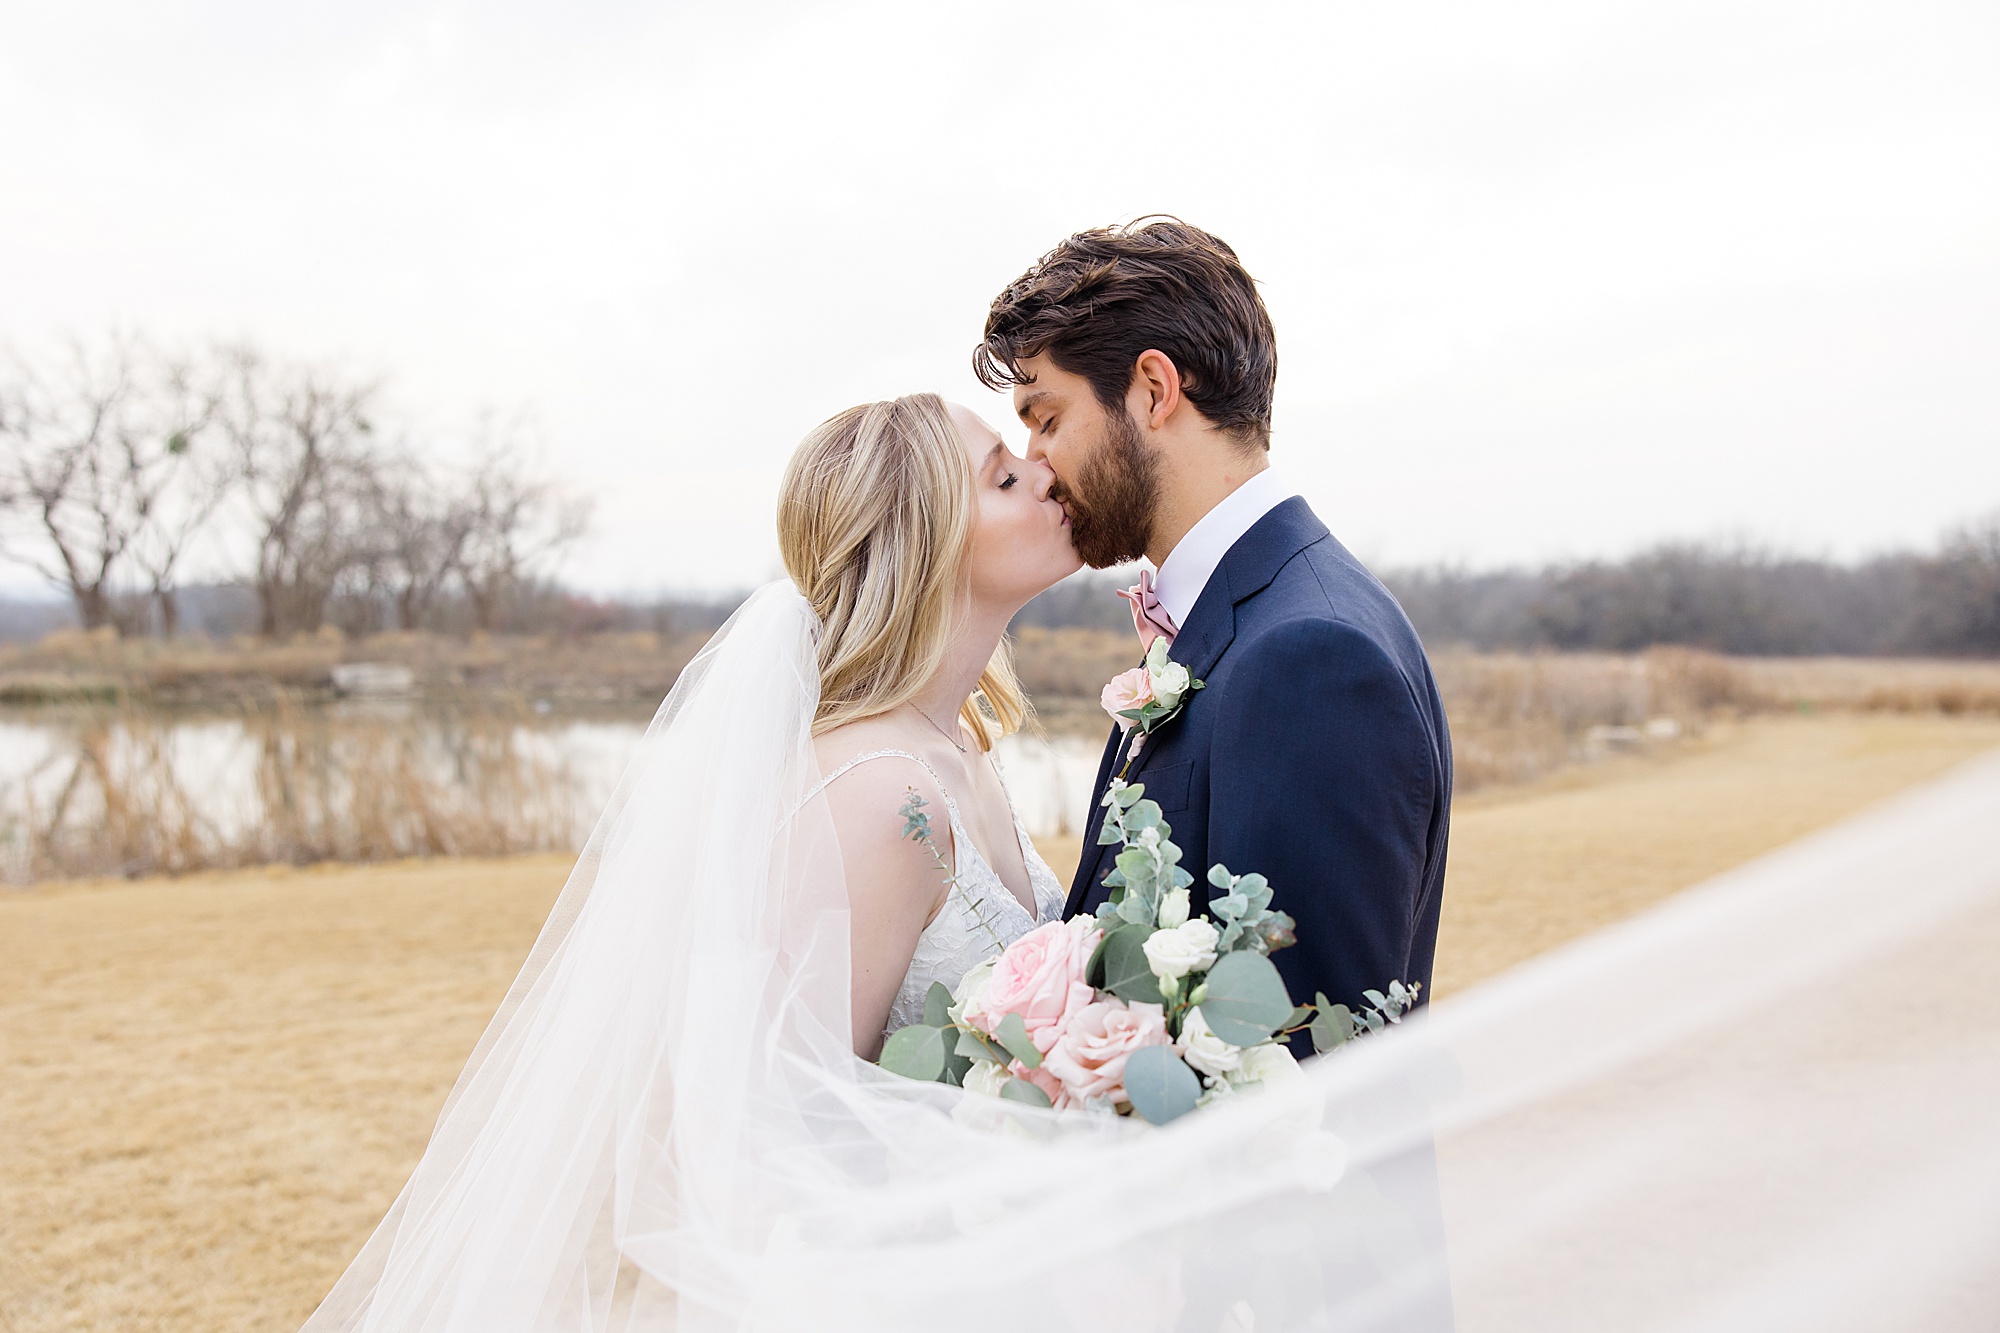 newlyweds kiss while bride's veil wraps around them